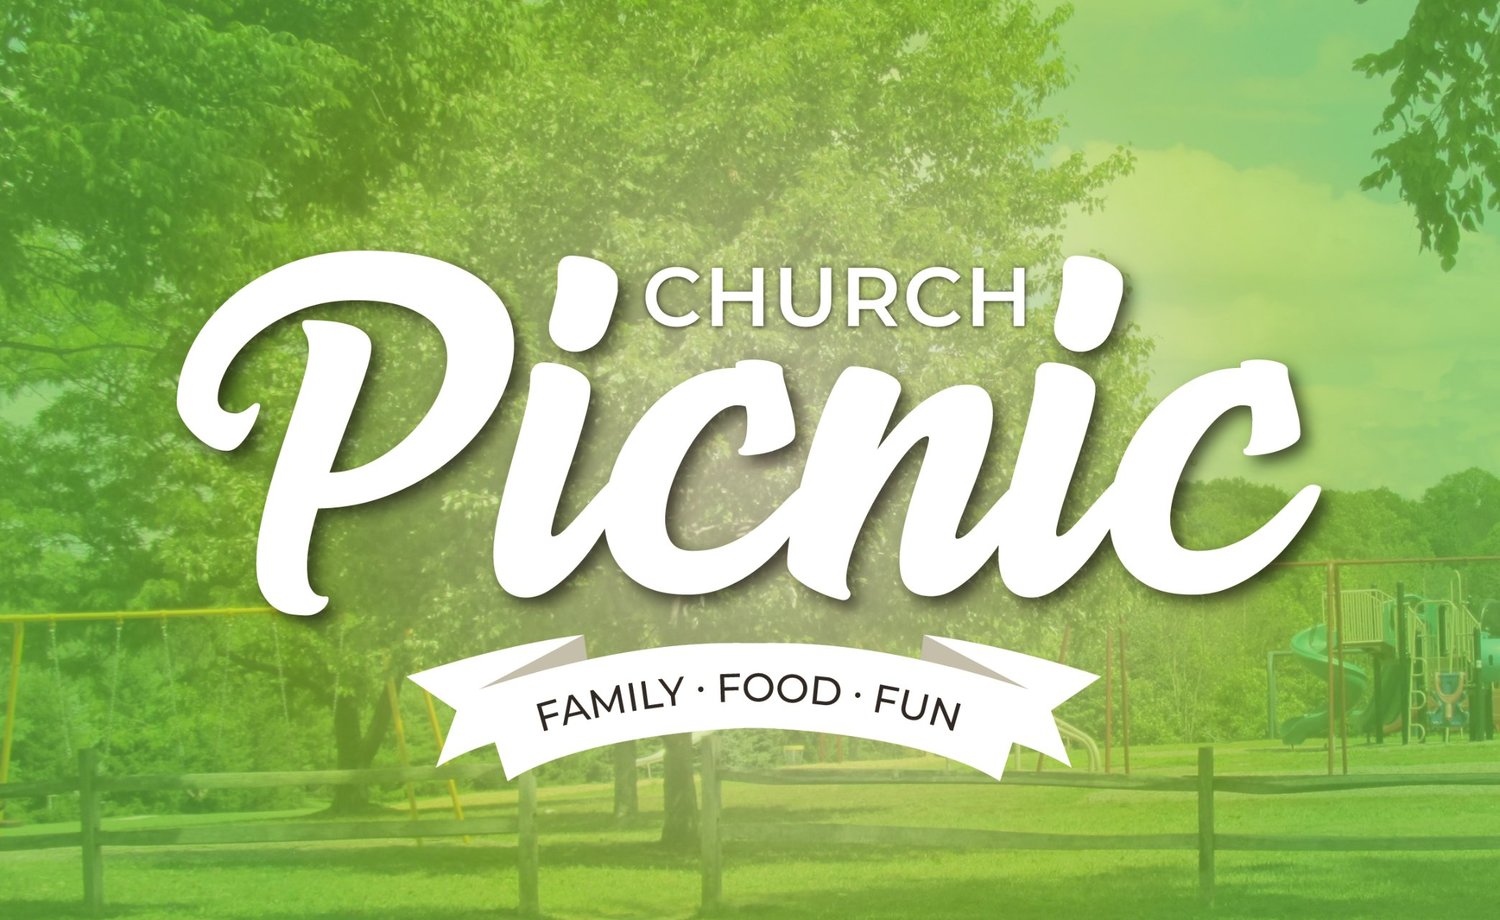 church picnic images